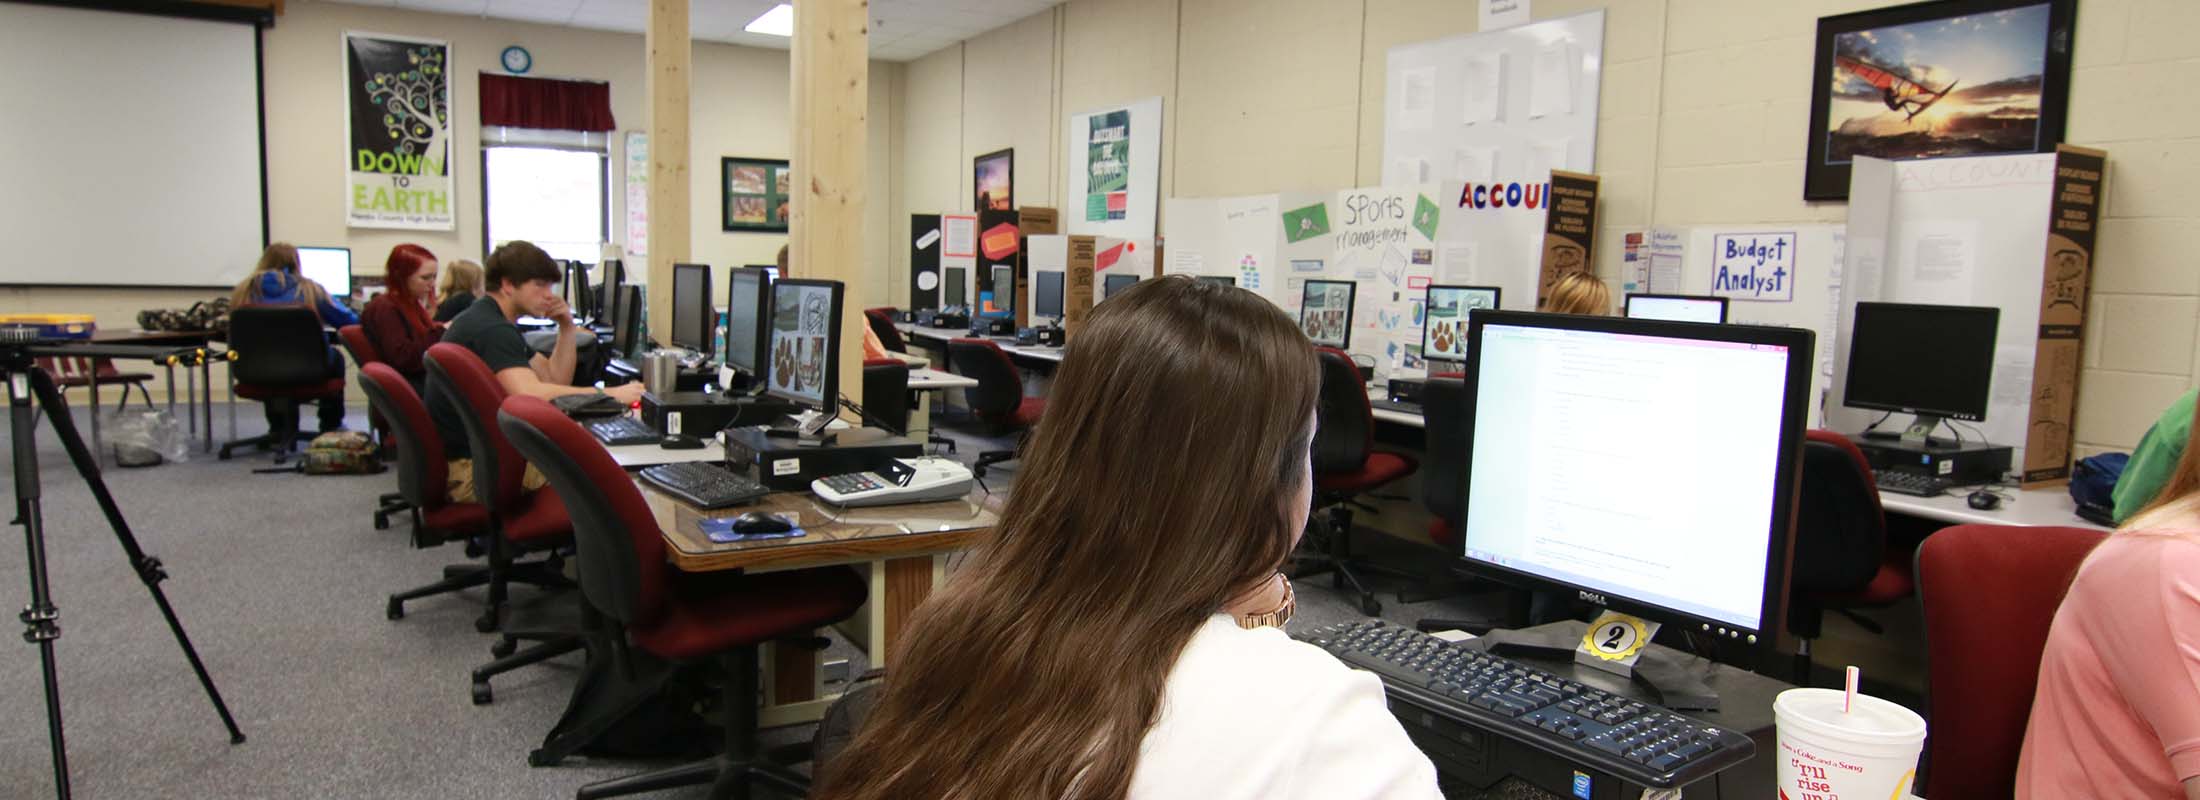 Students viewing a desktop computer.